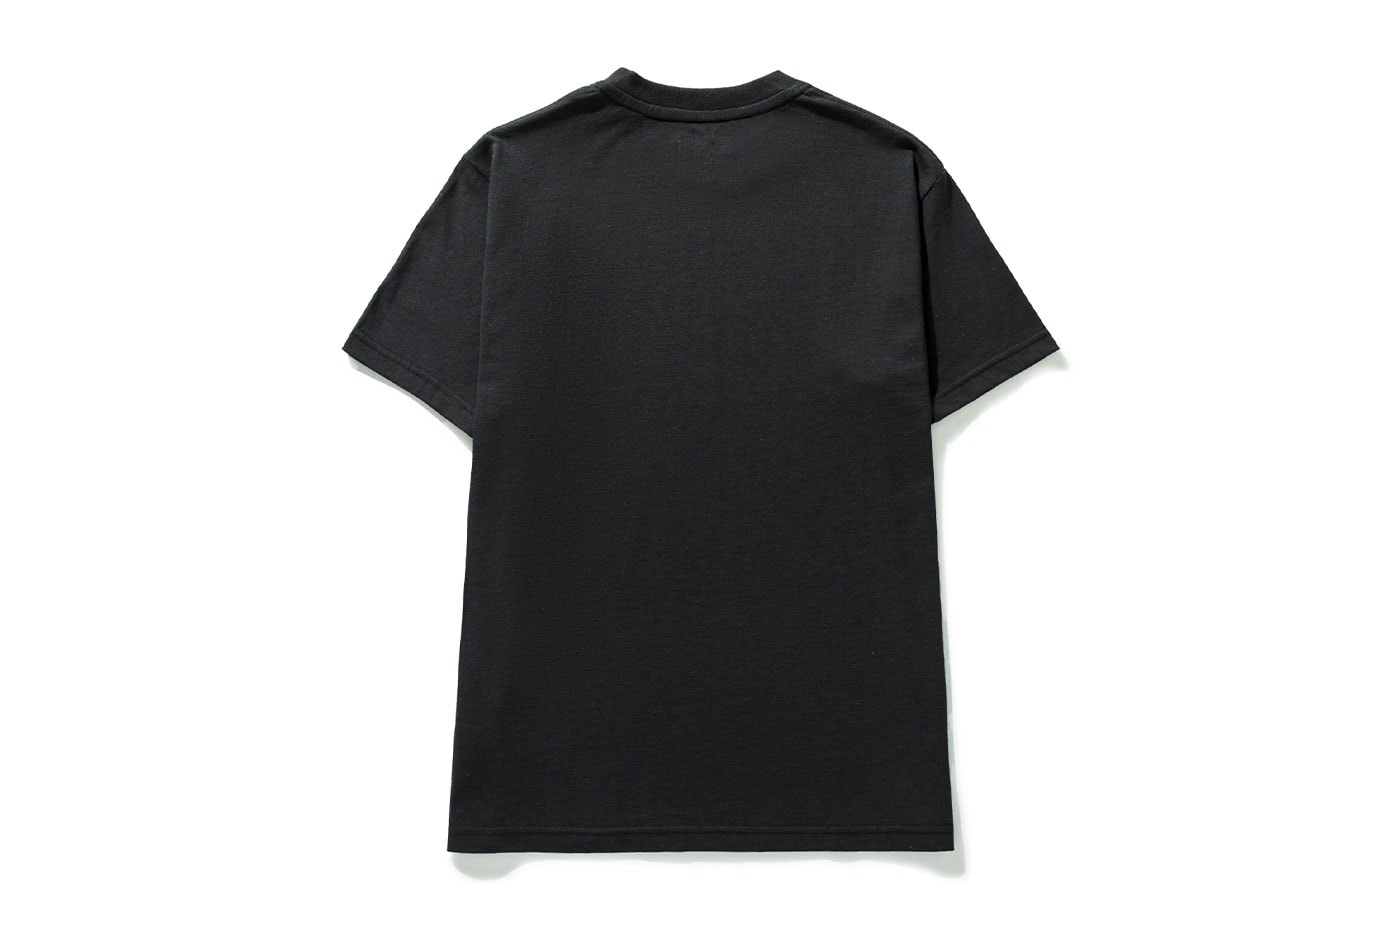 Teddy Santis New Balance MADE IN USA Collection Apparel Items HBX Release Info Buy Price Hoodies Sweatshirts T-shirts Shorts Sweatpants Indigo Navy Grey Black Cotton Jersey